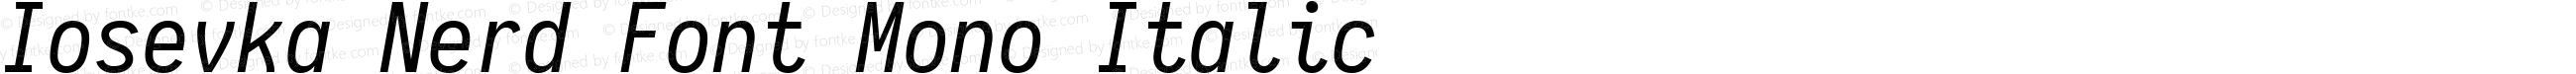 Iosevka Italic Nerd Font Complete Mono